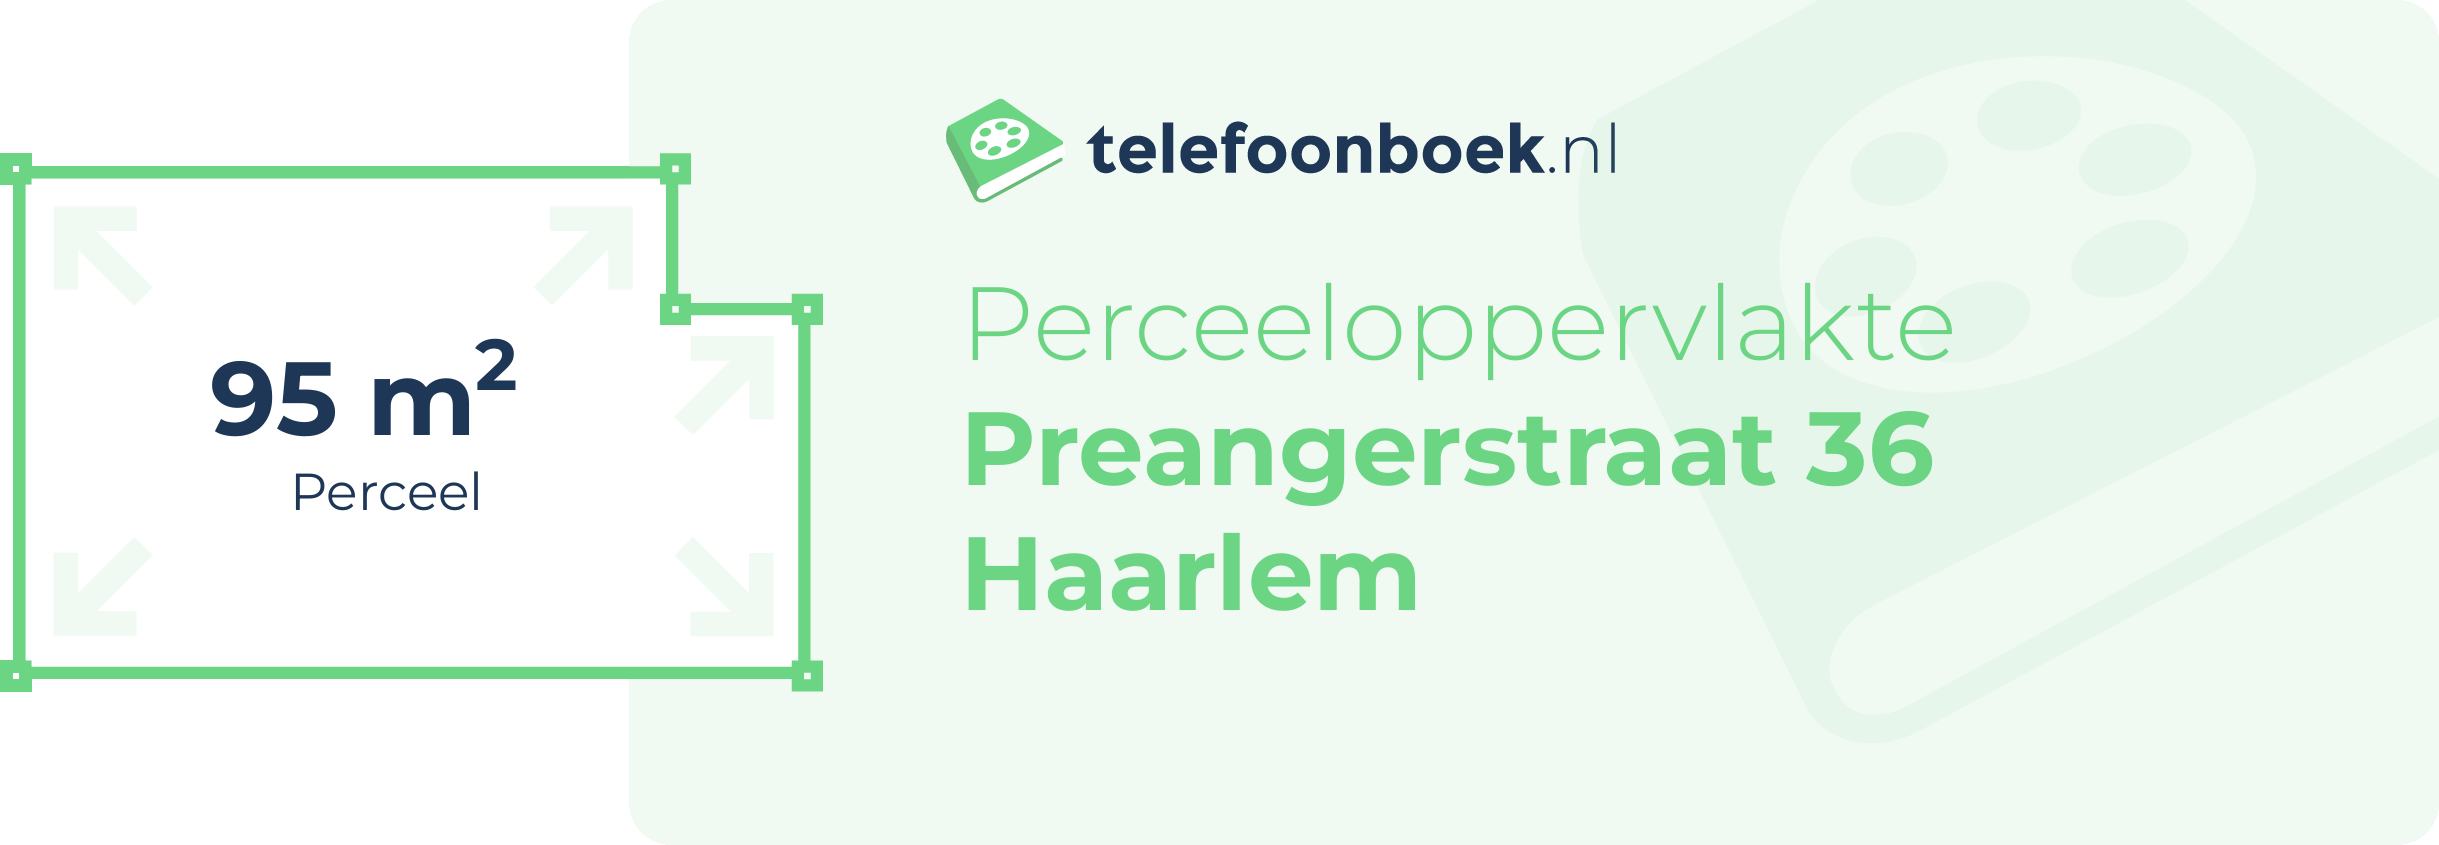 Perceeloppervlakte Preangerstraat 36 Haarlem